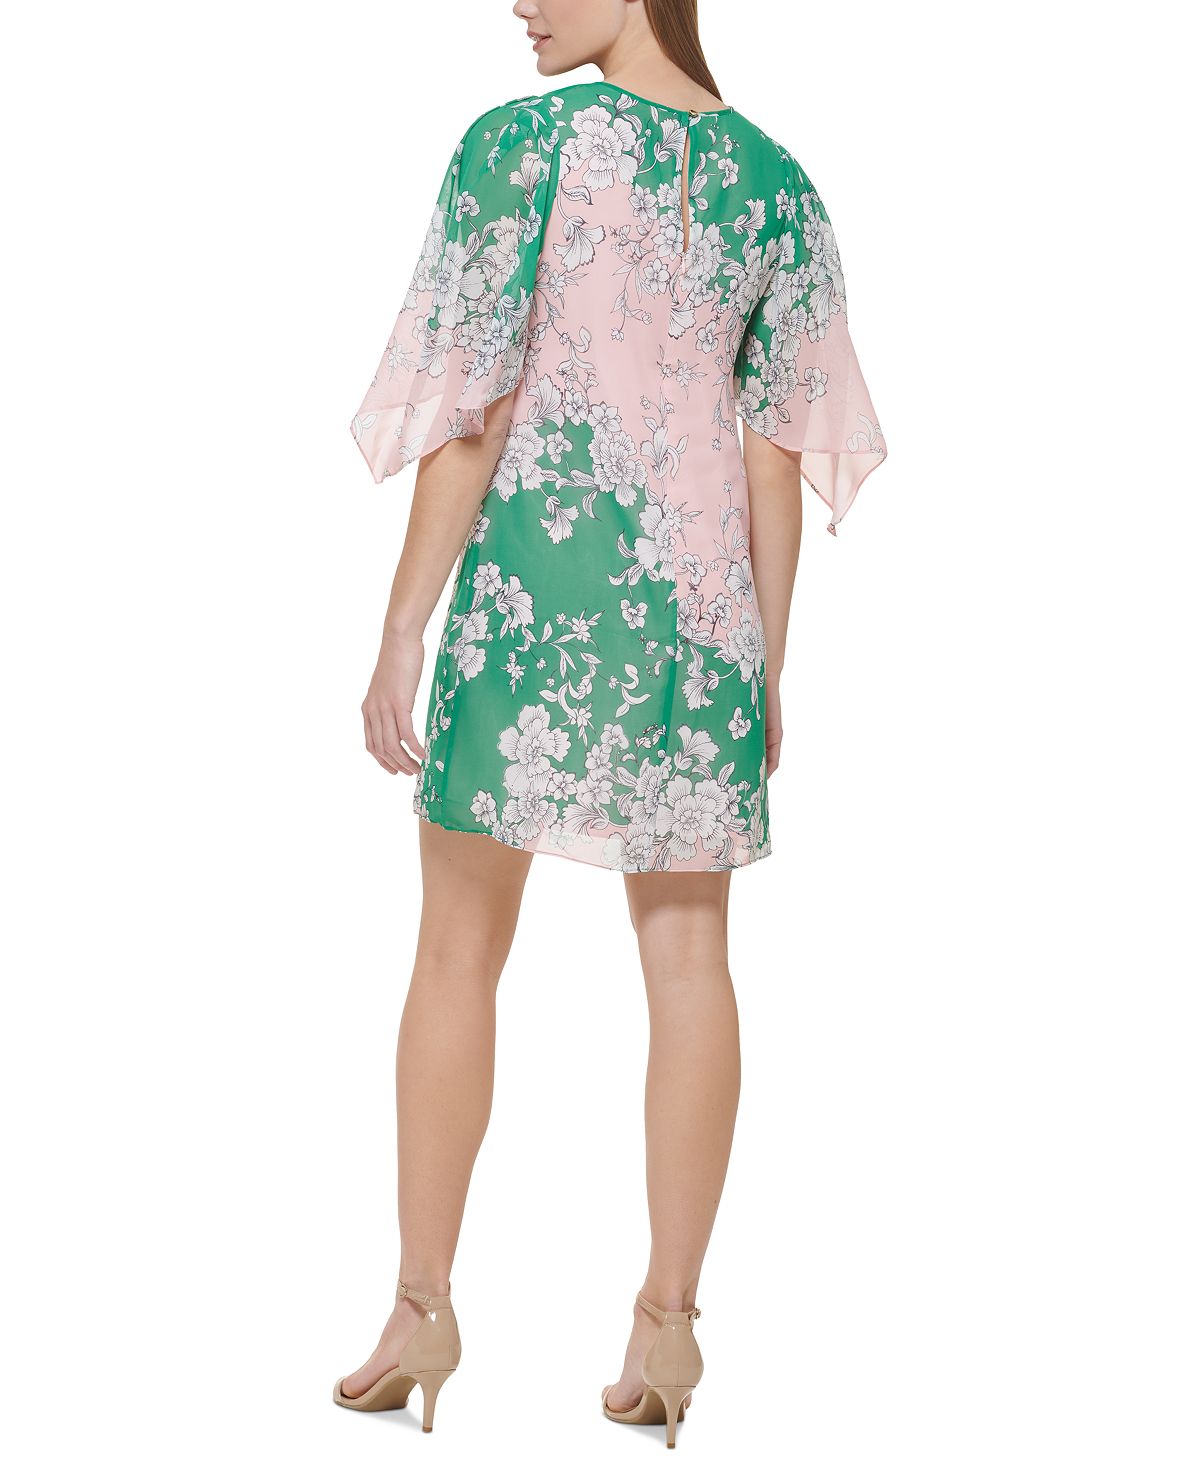 Vince Camuto Women's Floral Print Shift Dress Green Size 4Petite